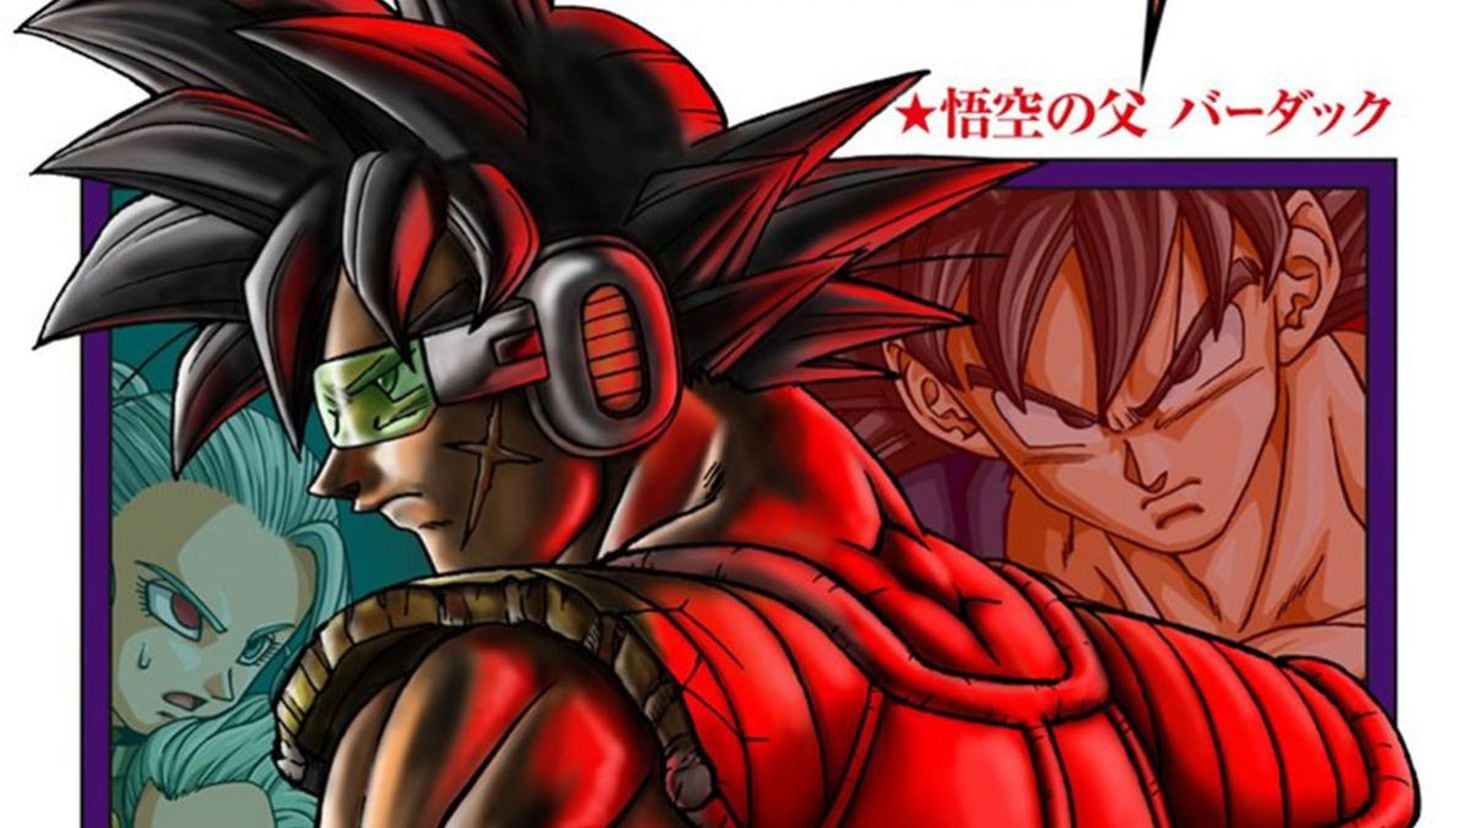 Dragon Ball Super: Bardock stars on the spectacular cover of manga